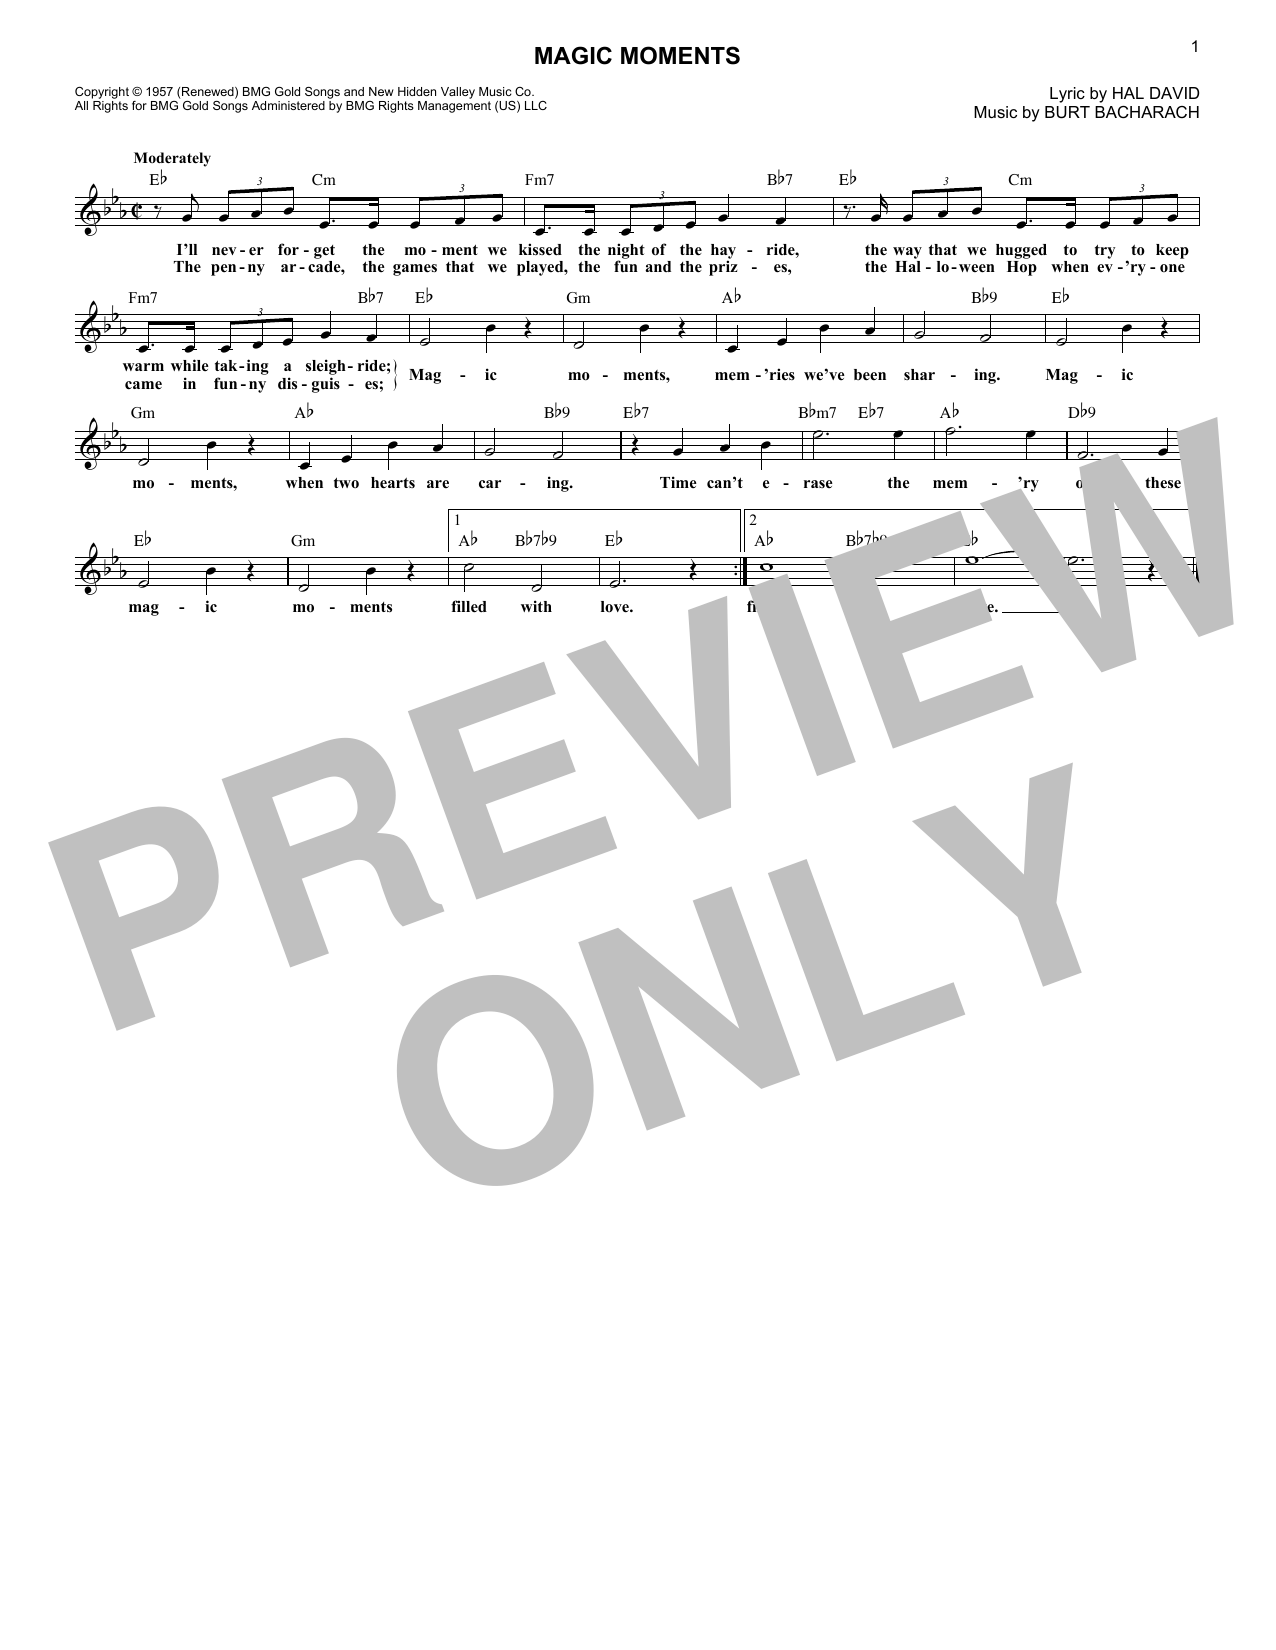 Burt Bacharach Magic Moments Sheet Music Notes & Chords for Lead Sheet / Fake Book - Download or Print PDF